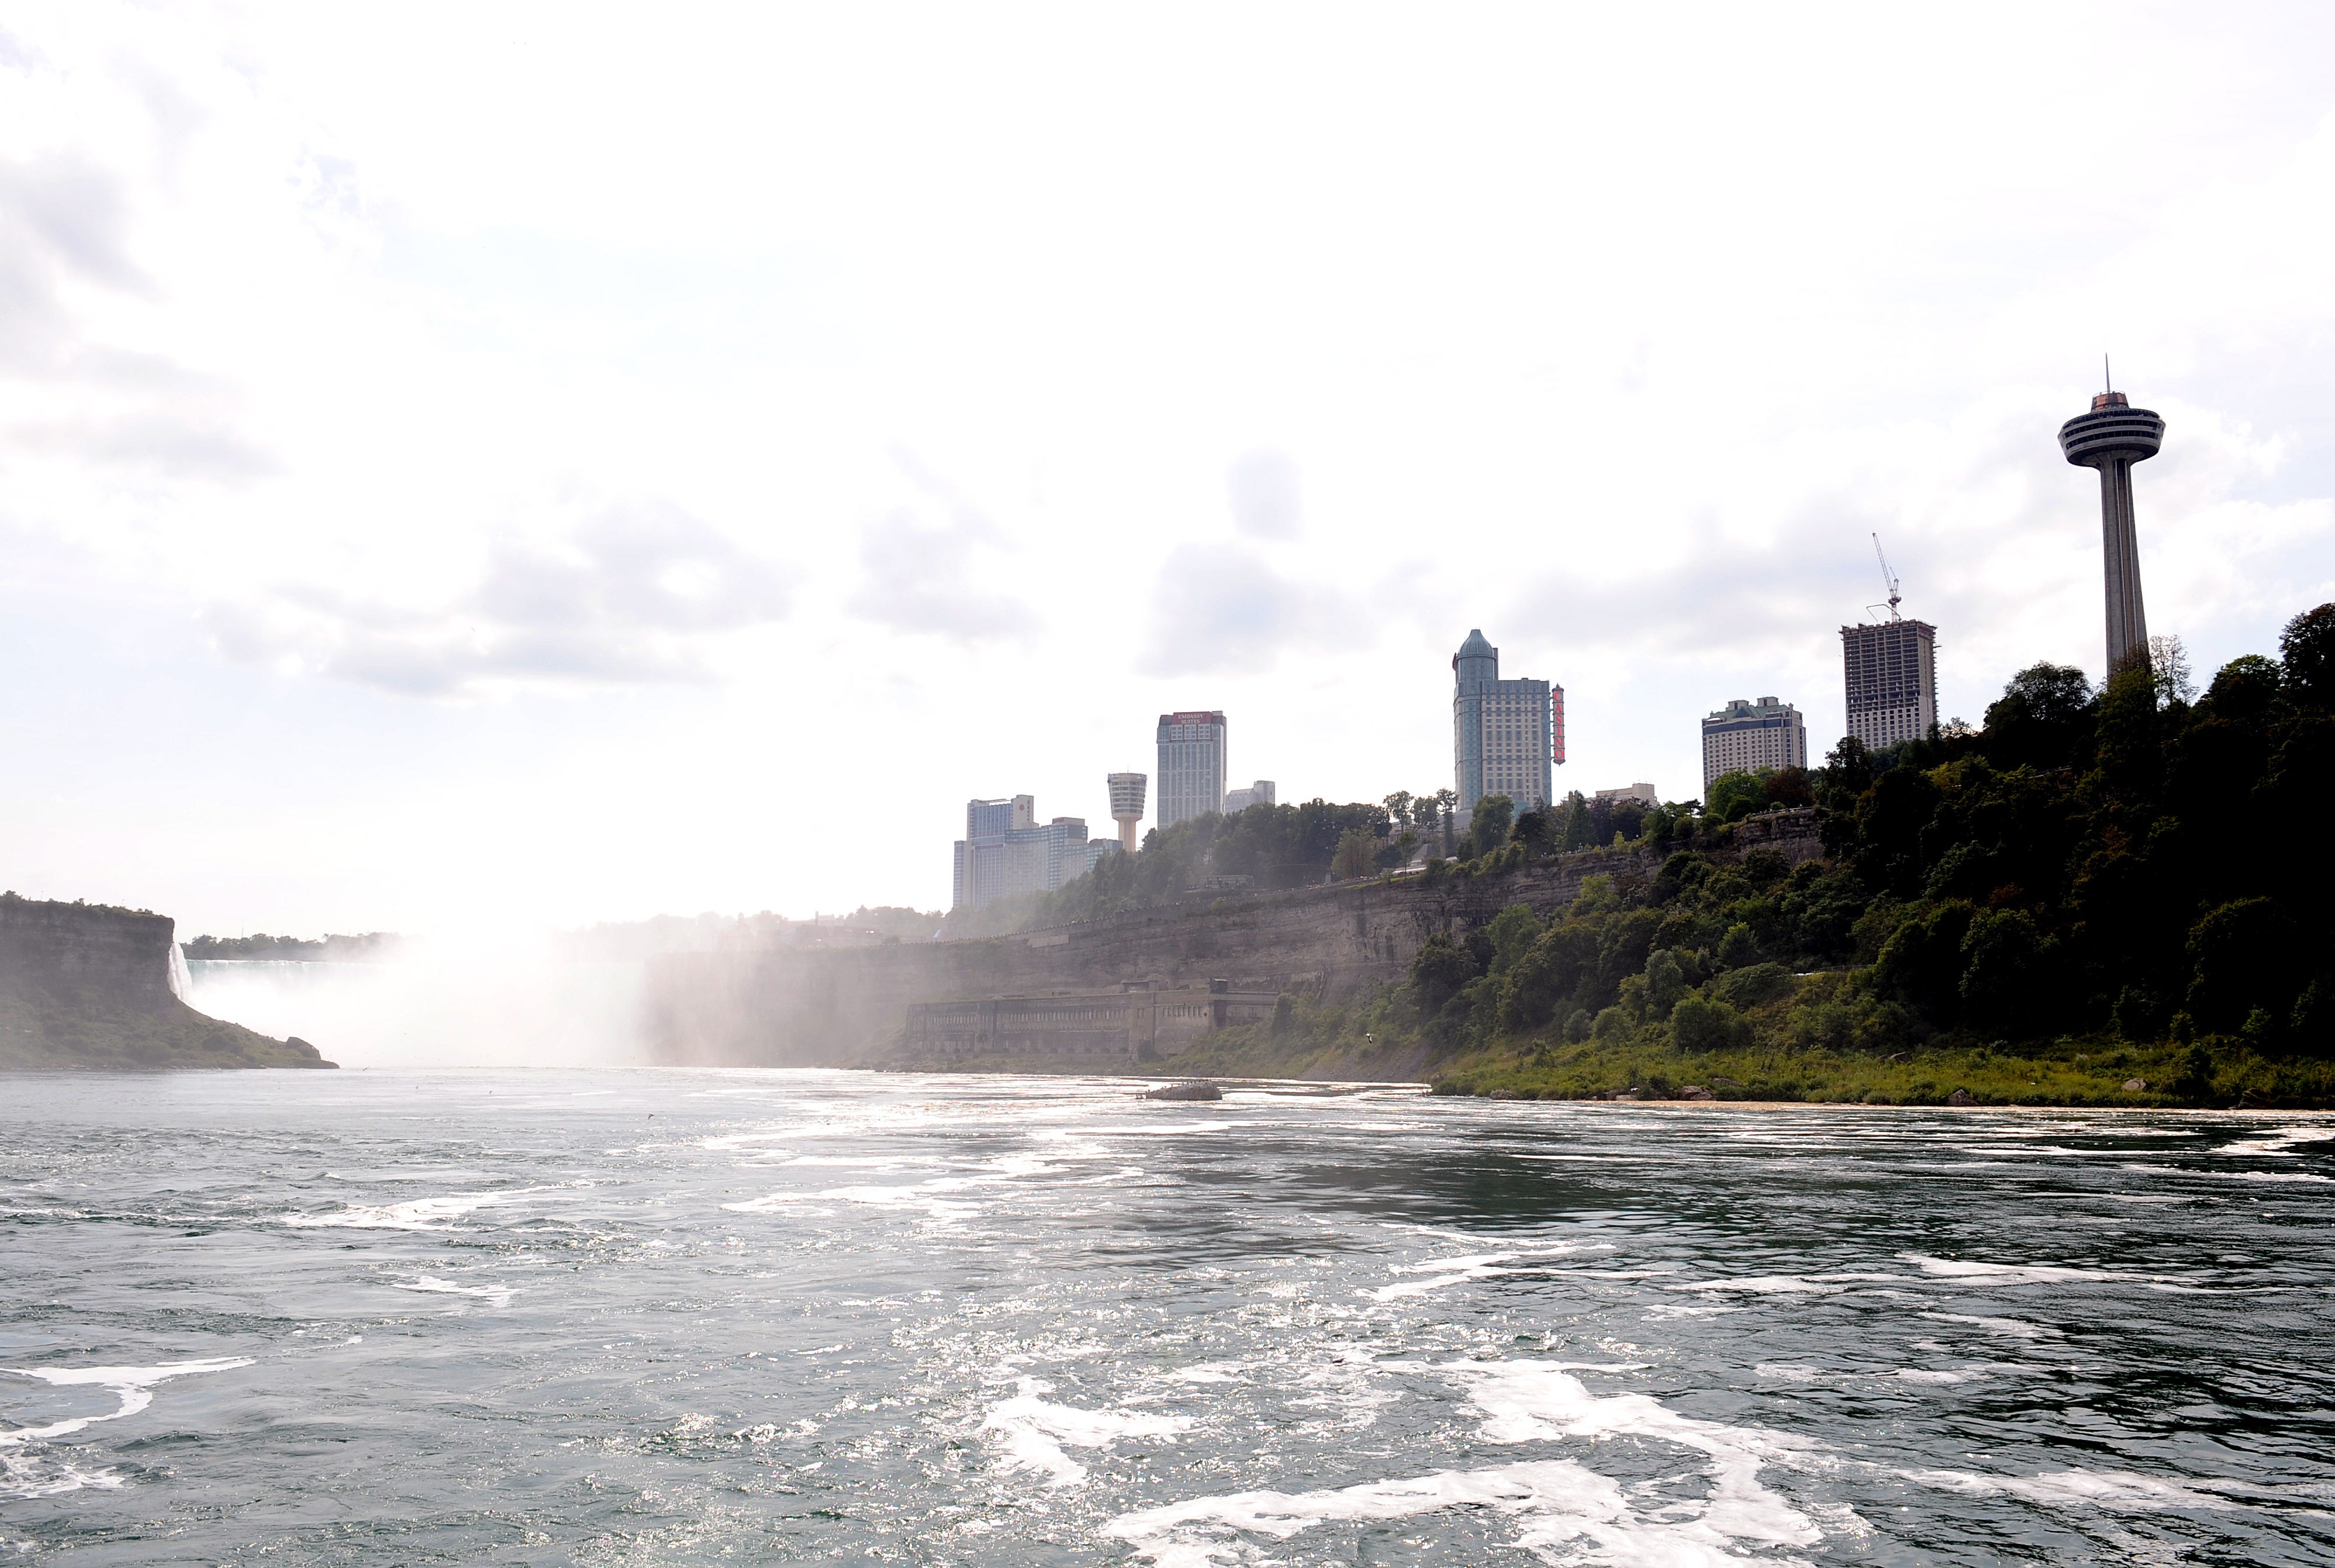 The Horseshoe falls, part of the Niagara Falls in Ontario, Canada (Ian West/PA)